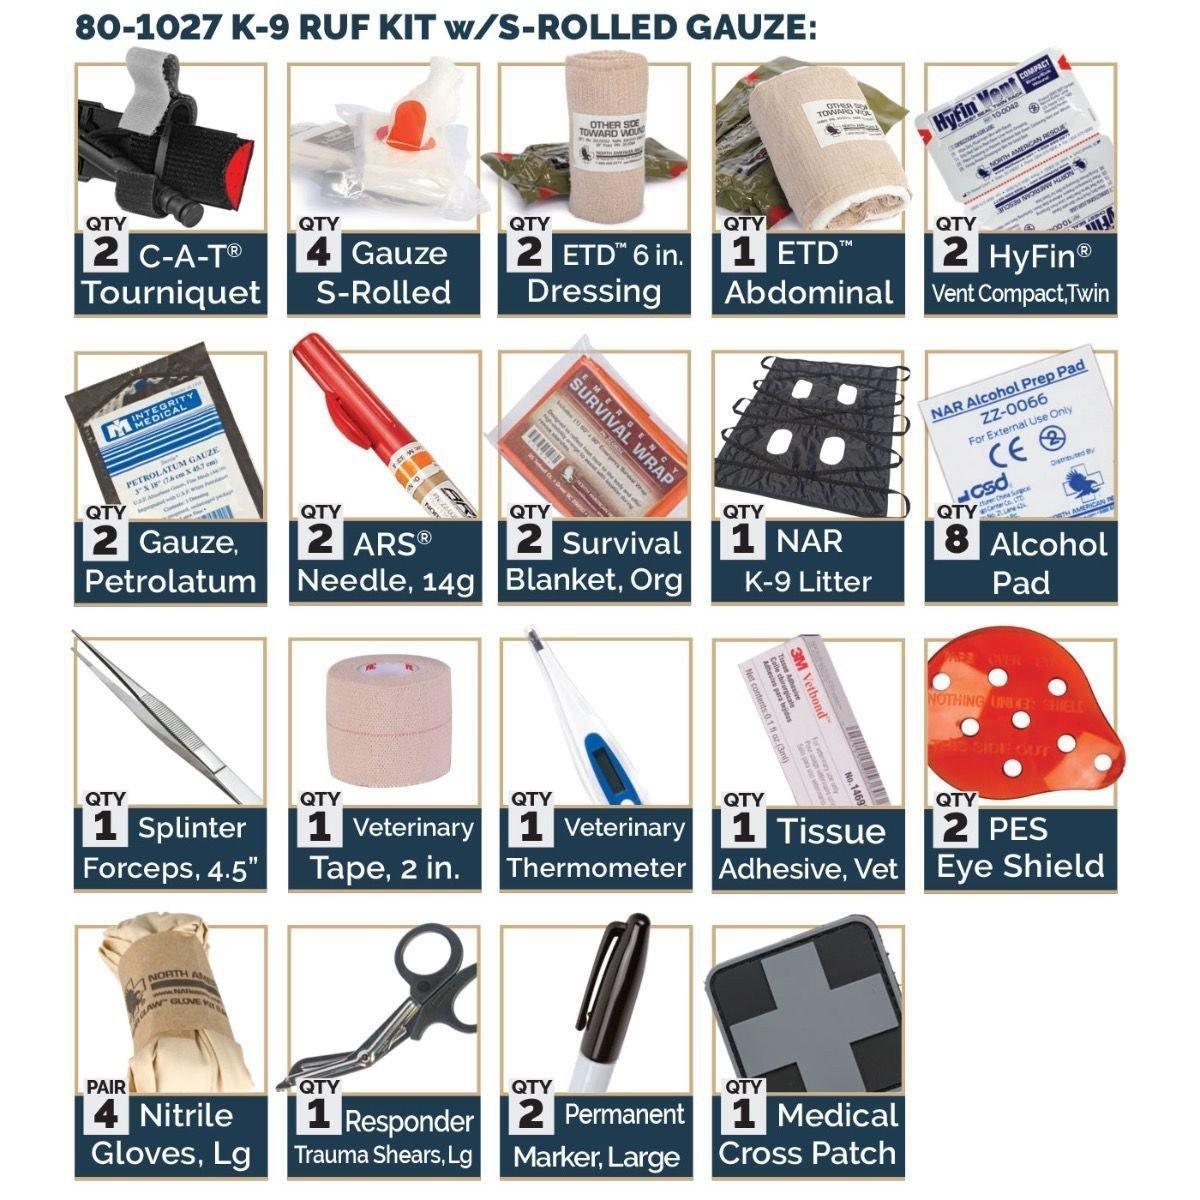 K-9 RUF Medical Kit - Vendor